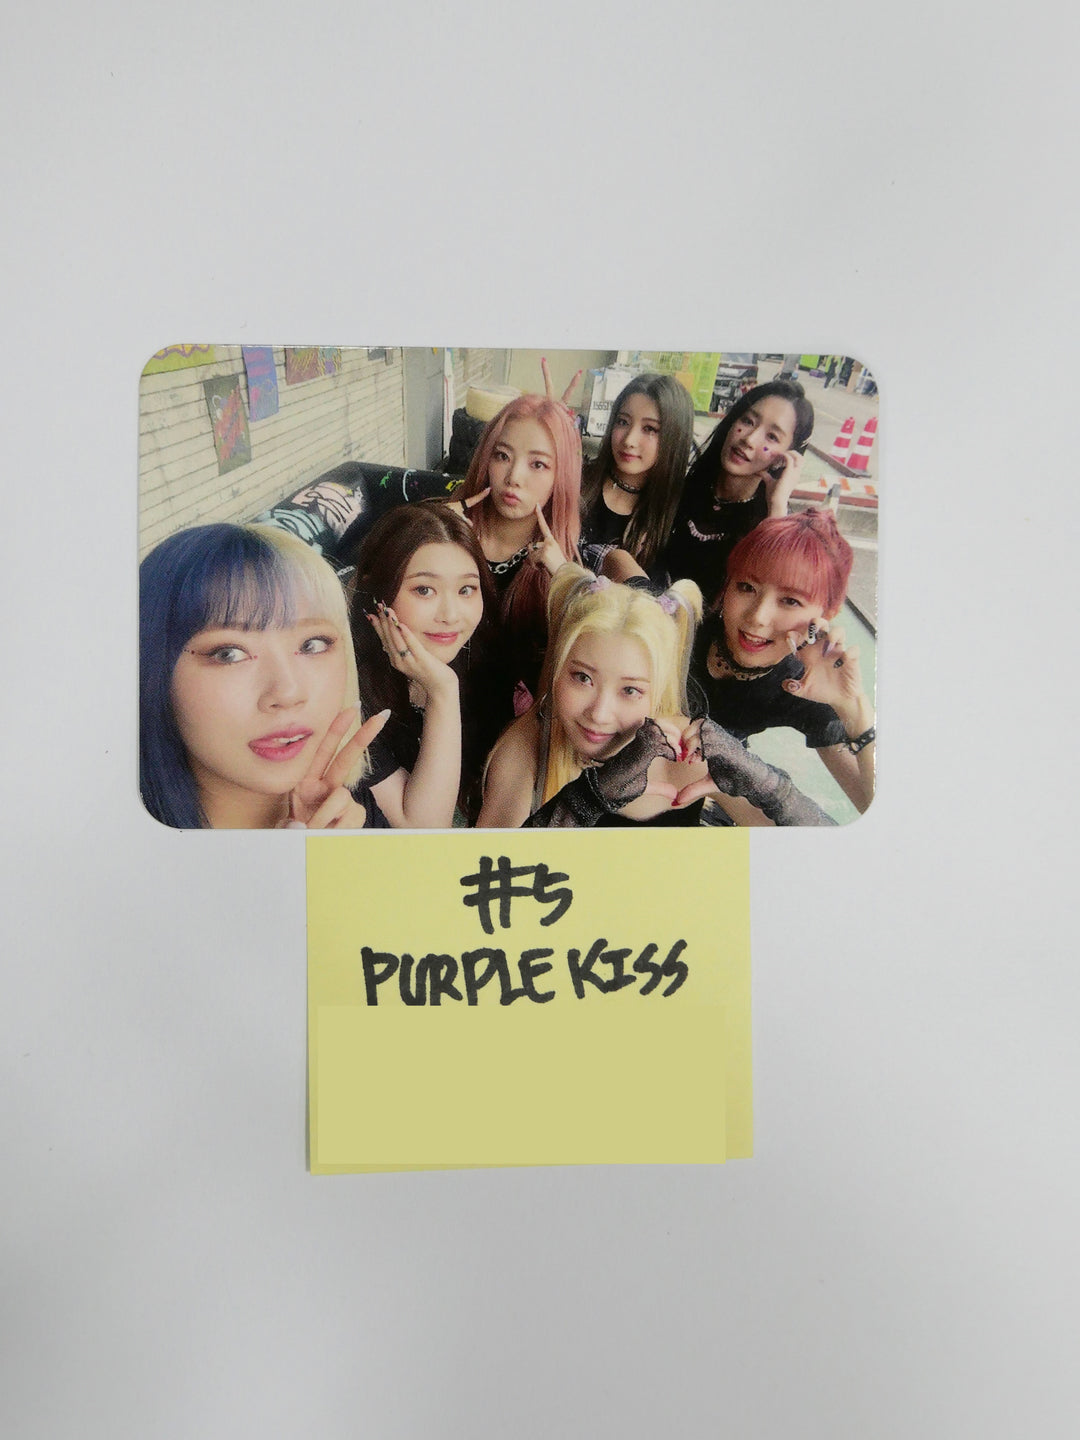 Purple Kiss 'Hide & Seek' - Hand Autographed(Signed) Polaroid, Acrylic Standee (Fansign Winner)